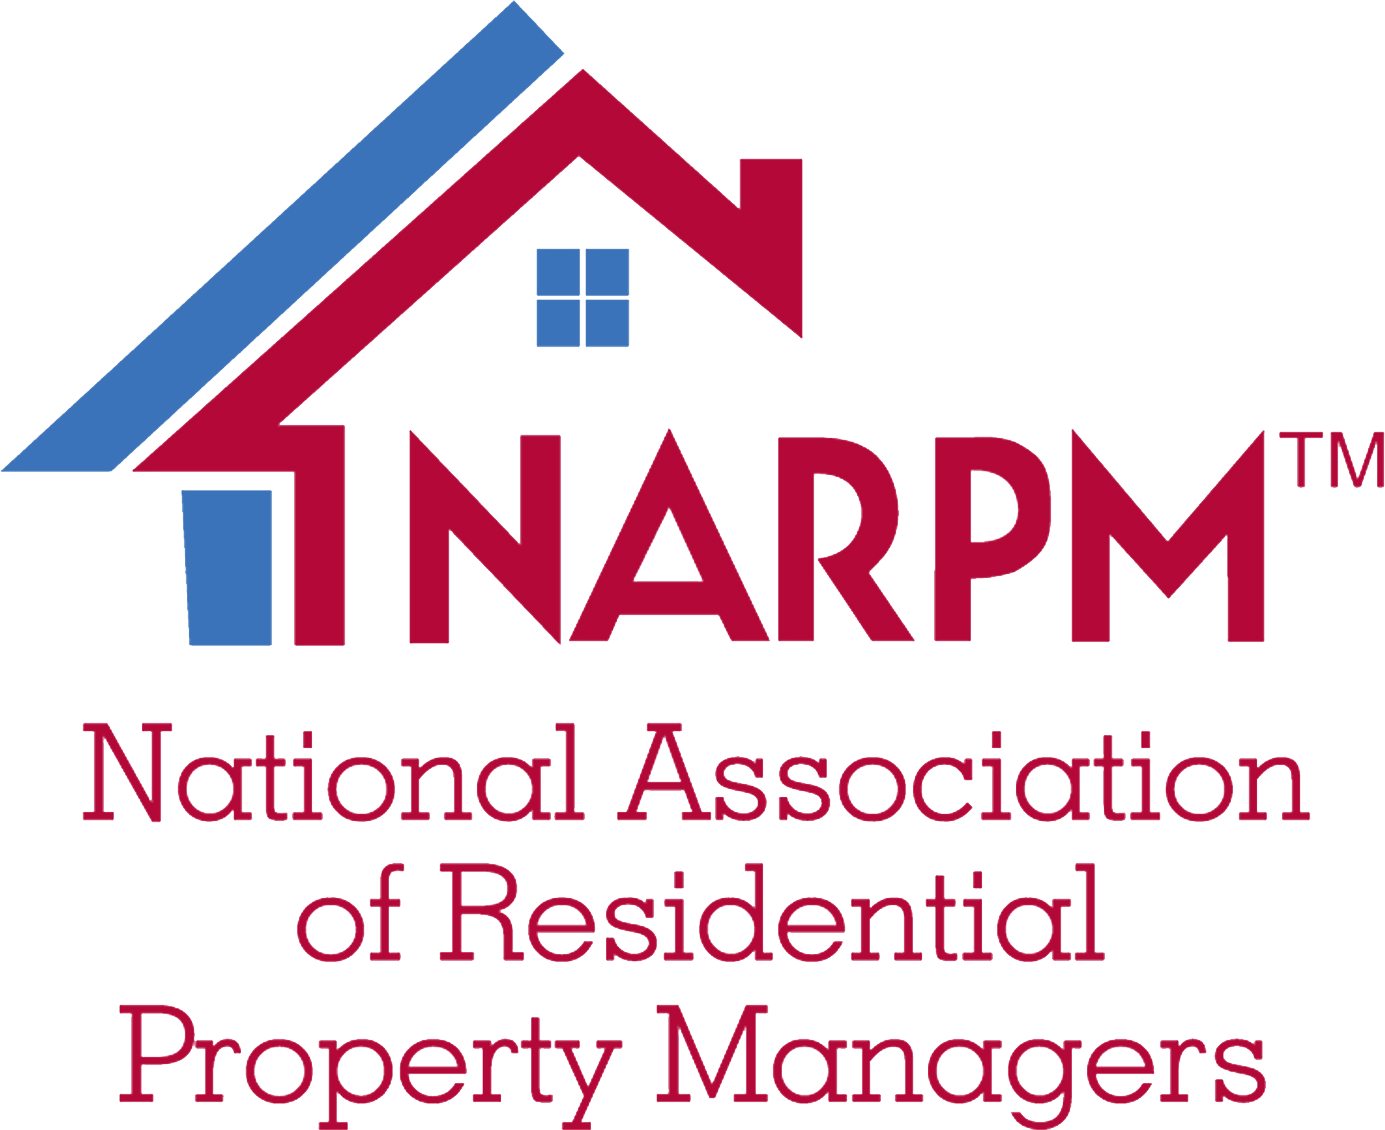 True Property Management CRMLS Property Management Companies In Orange County